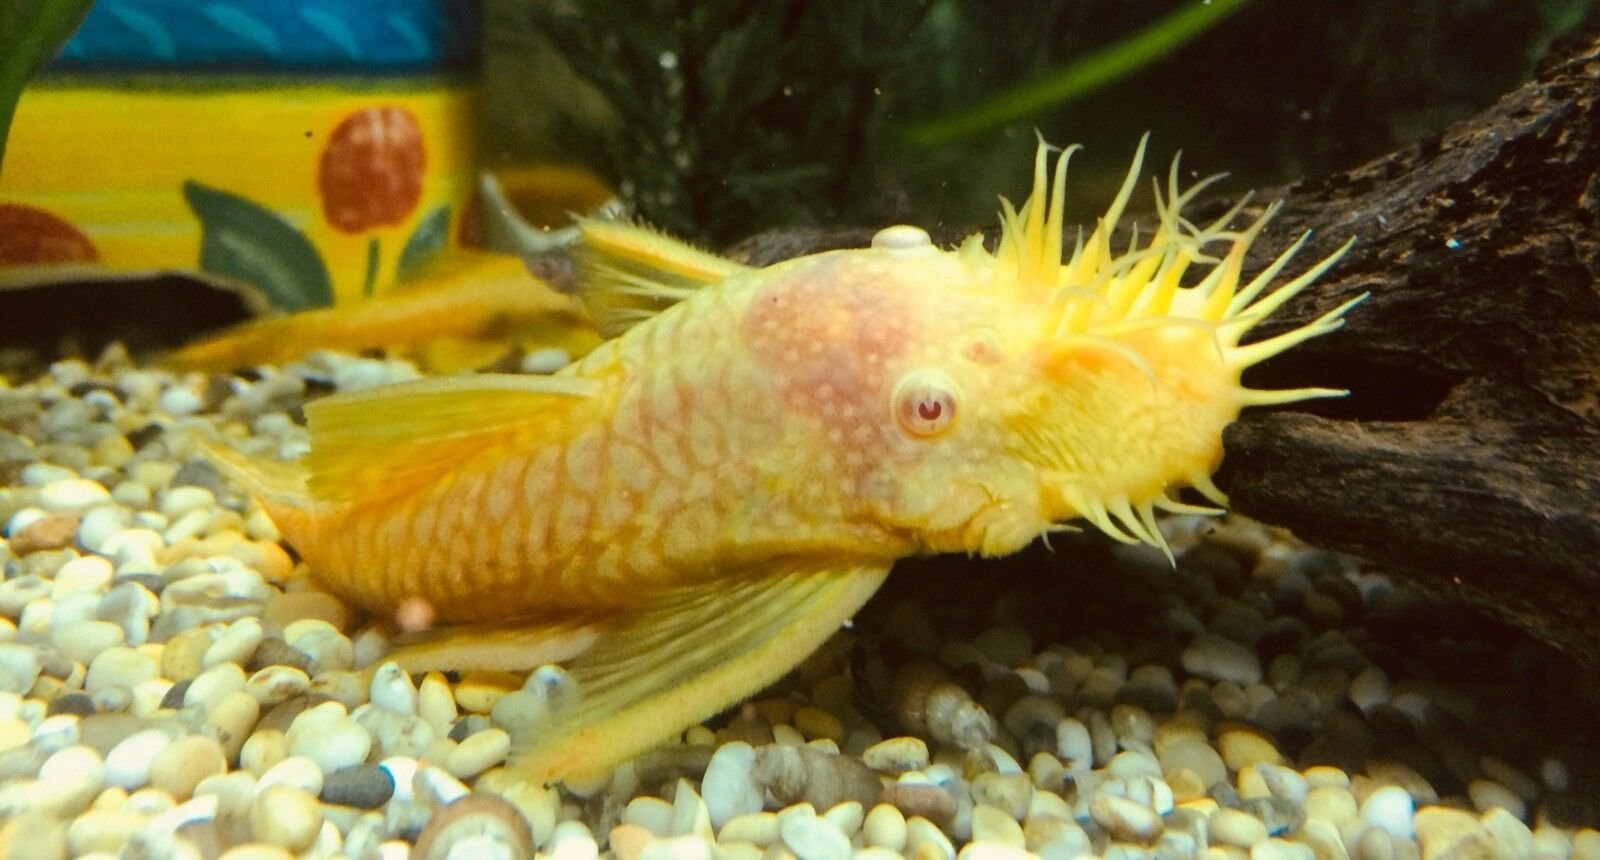 Bristlenose pleco catfish